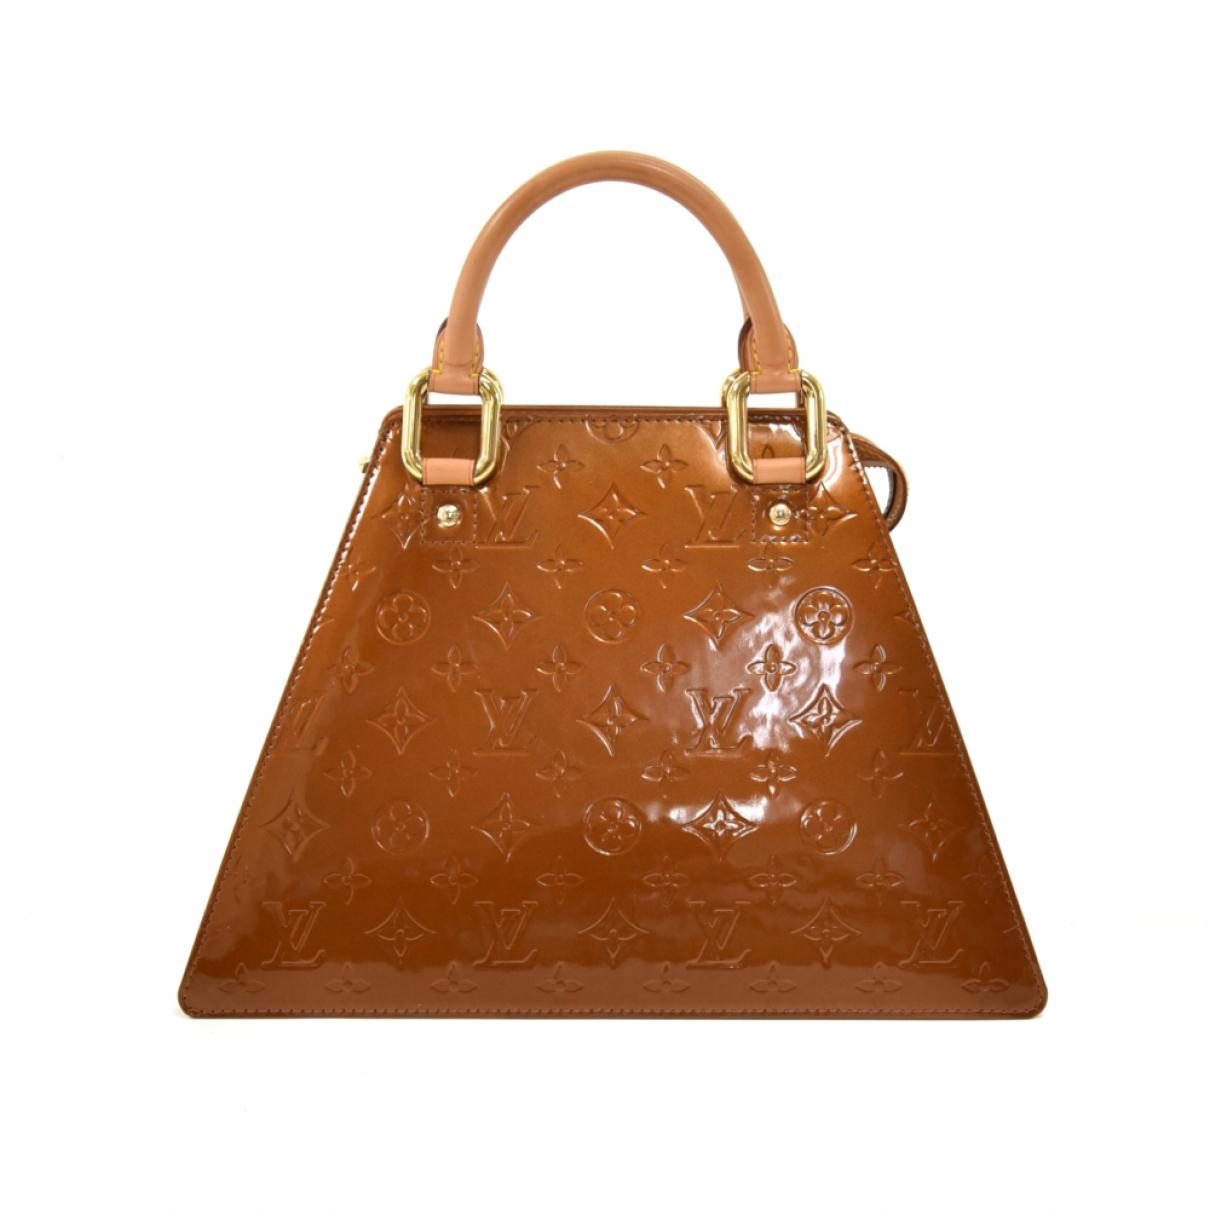 Lyst - Louis Vuitton Vintage Metallic Patent Leather Handbag in Metallic